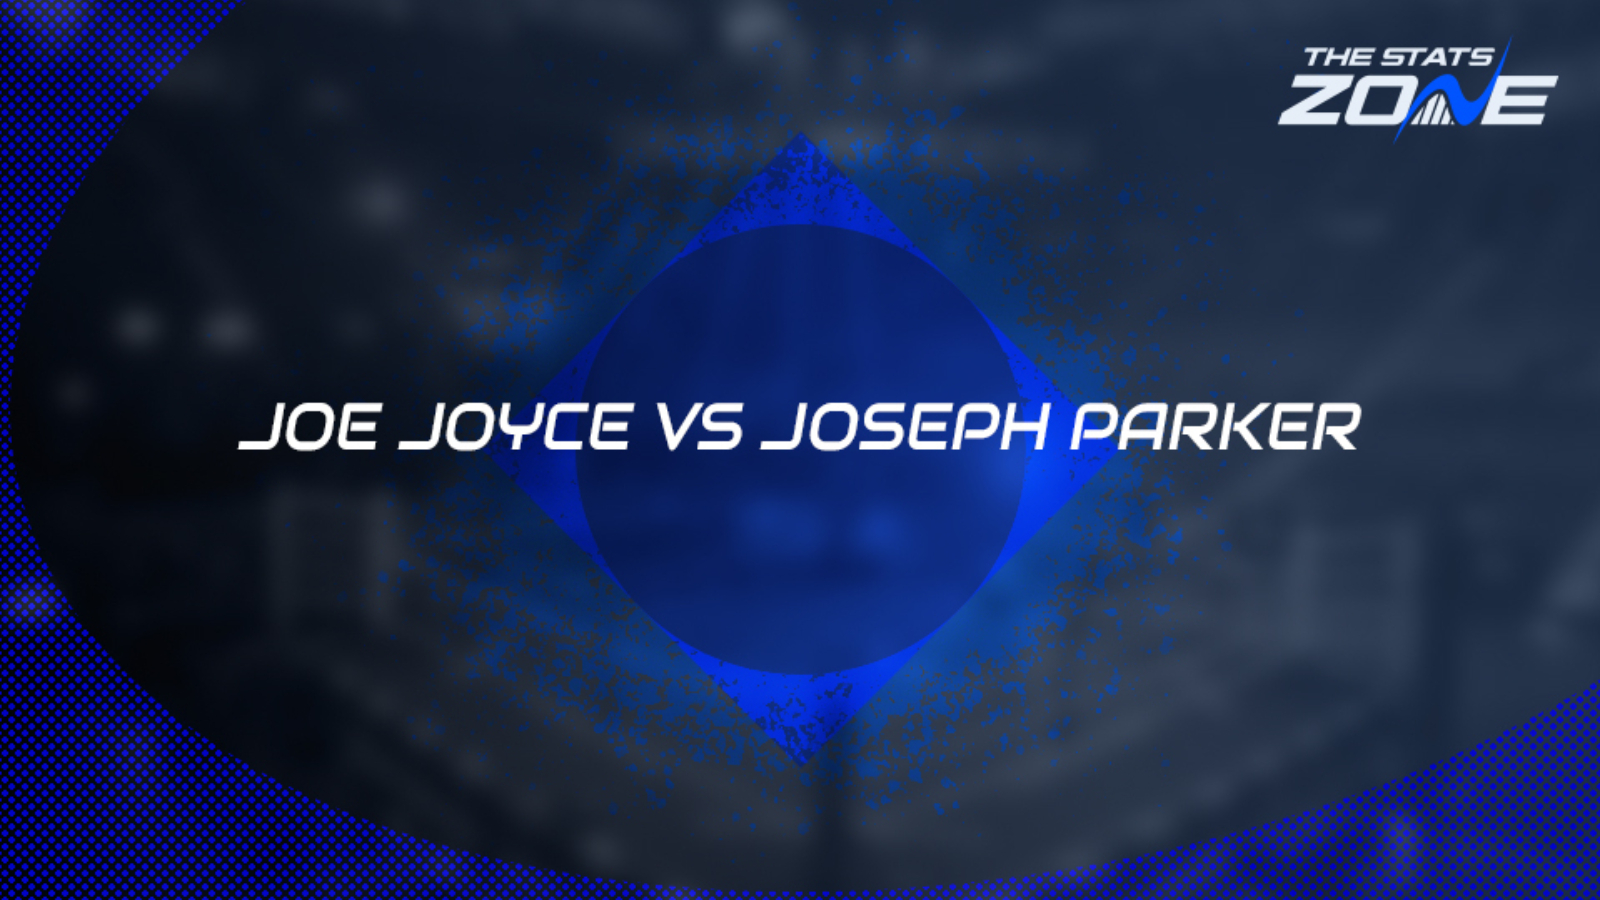 Joe Joyce vs Joseph Parker Preview and Prediction